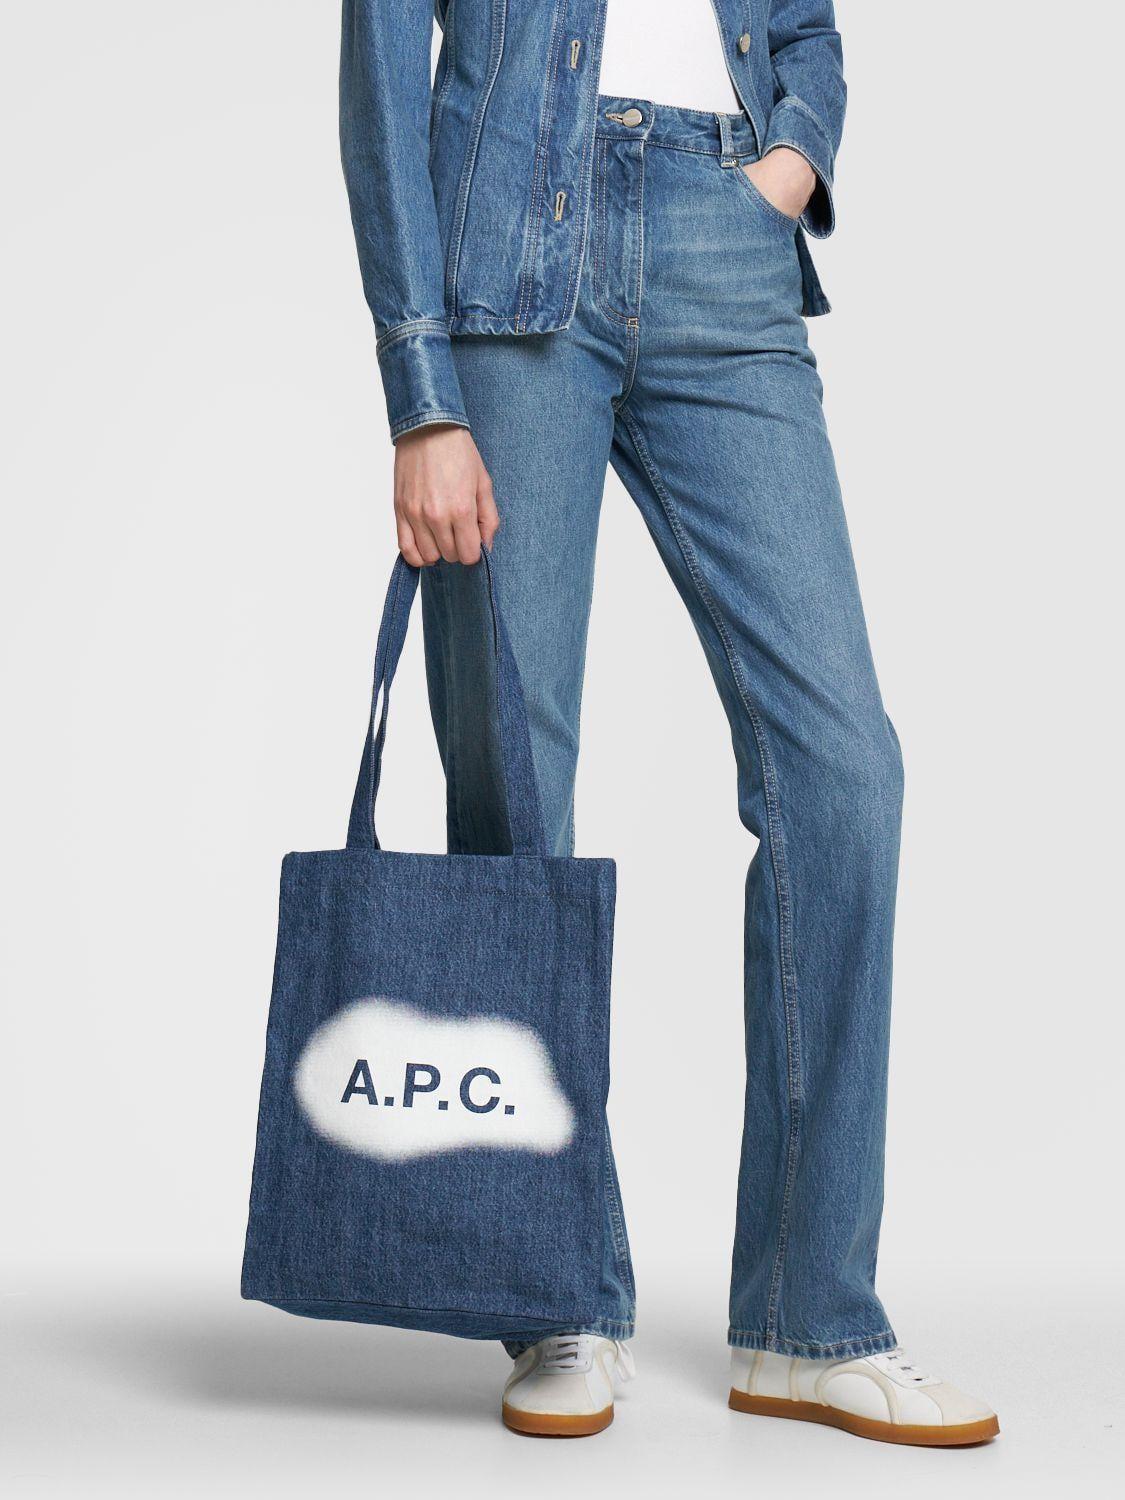 A.P.C. Lou Washed Denim Tote Bag in Blue | Lyst